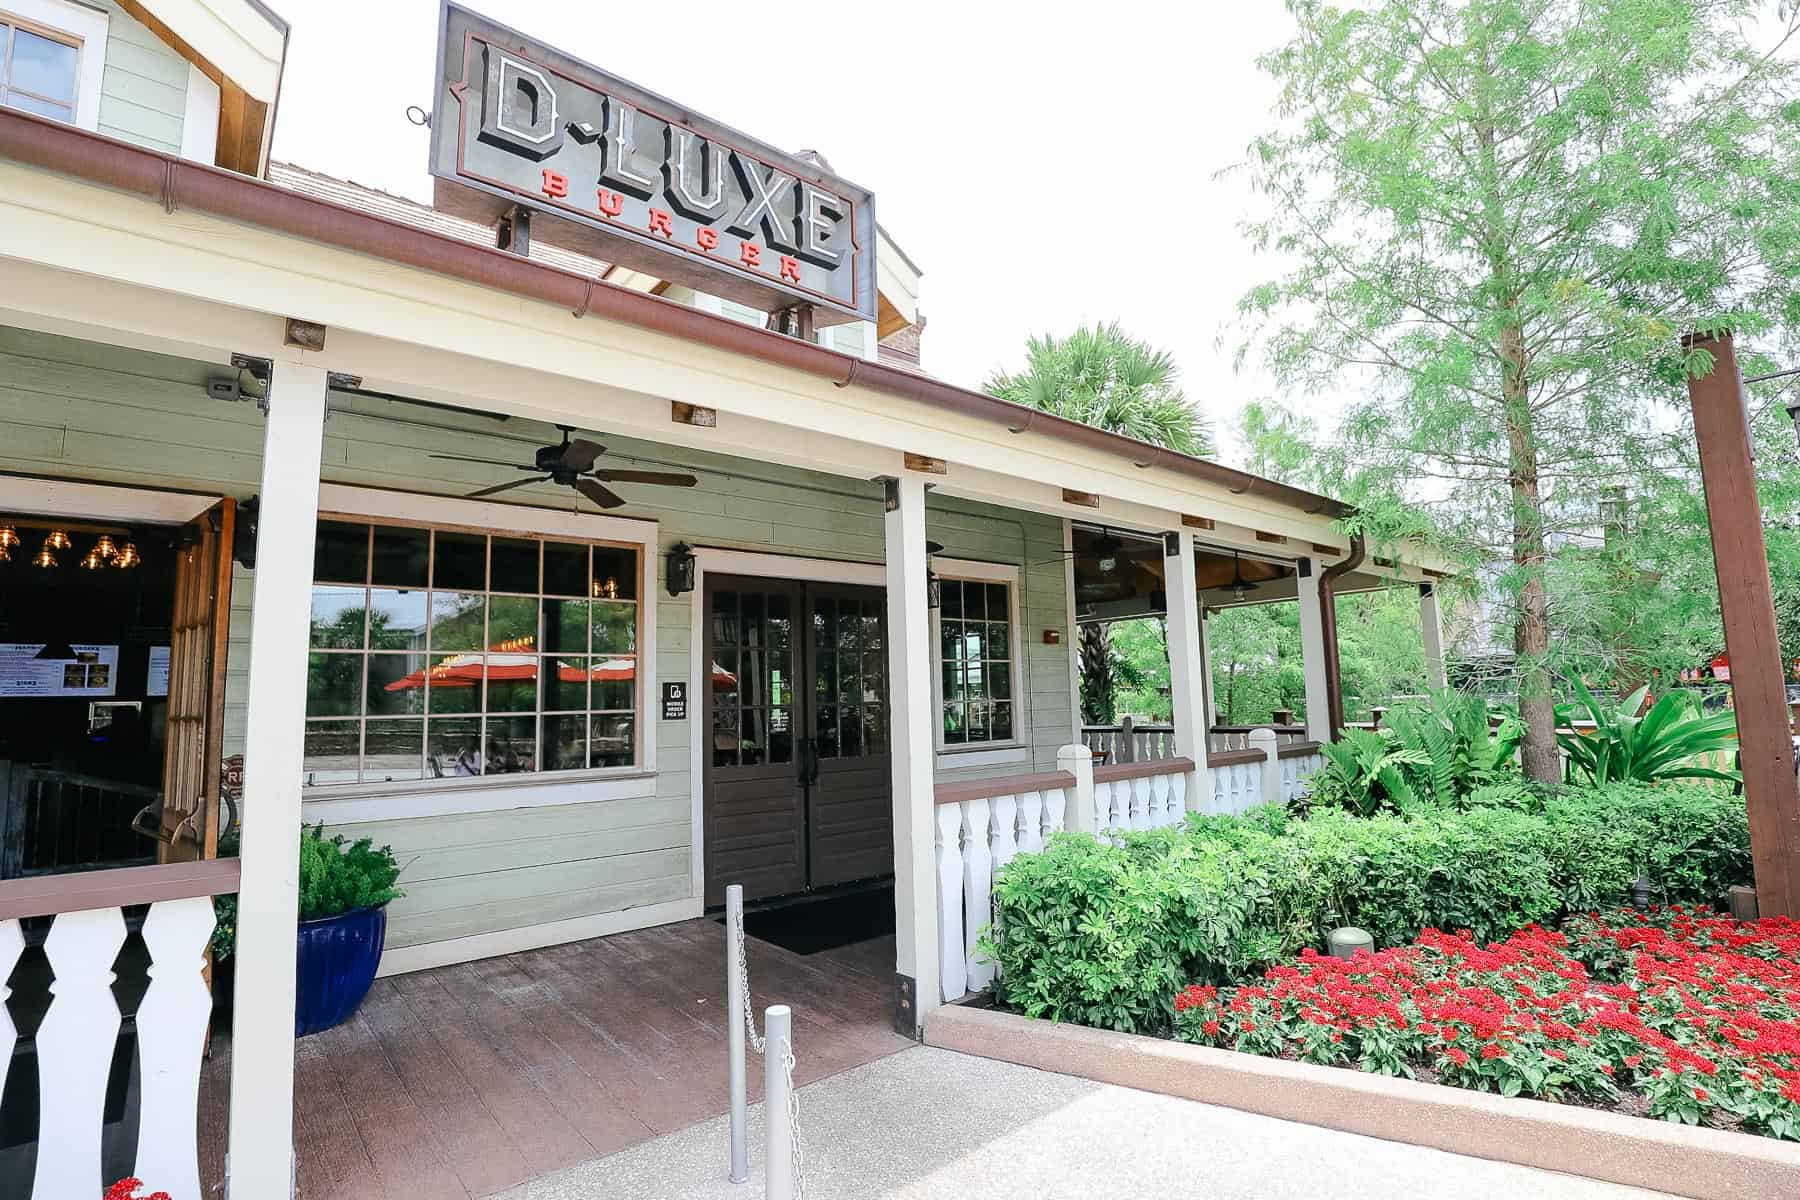 D-Luxe Burger at Disney Springs